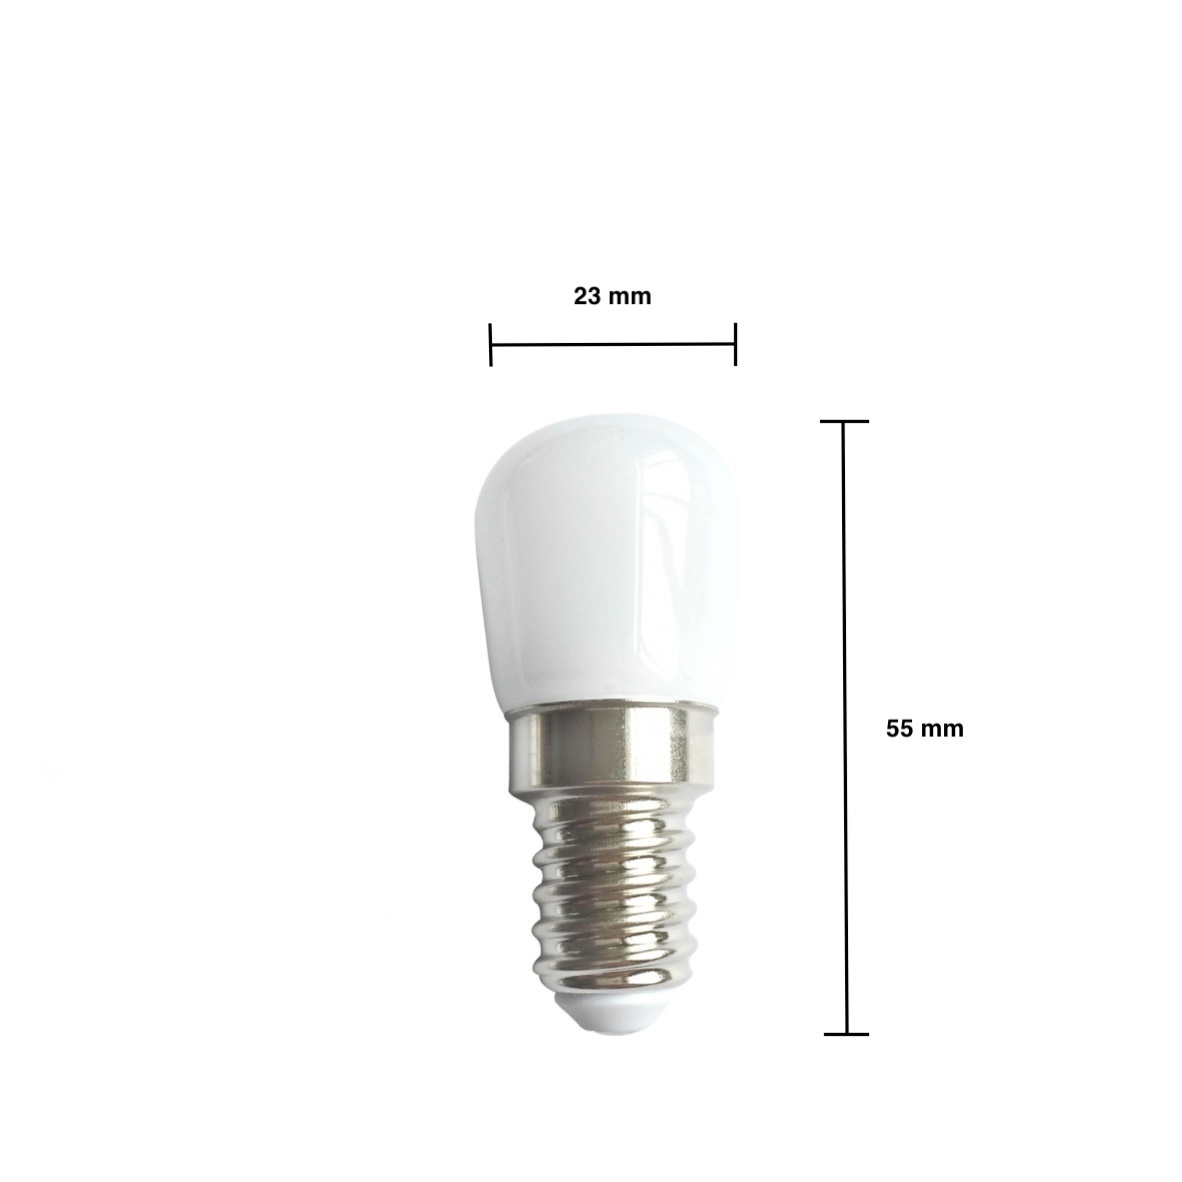 vitaliteit Dislocatie vooroordeel LED Koelkast lamp E14 fitting - 6000K daglicht wit - 2W vervangt 16W -  Ledpanelendiscounter.nl